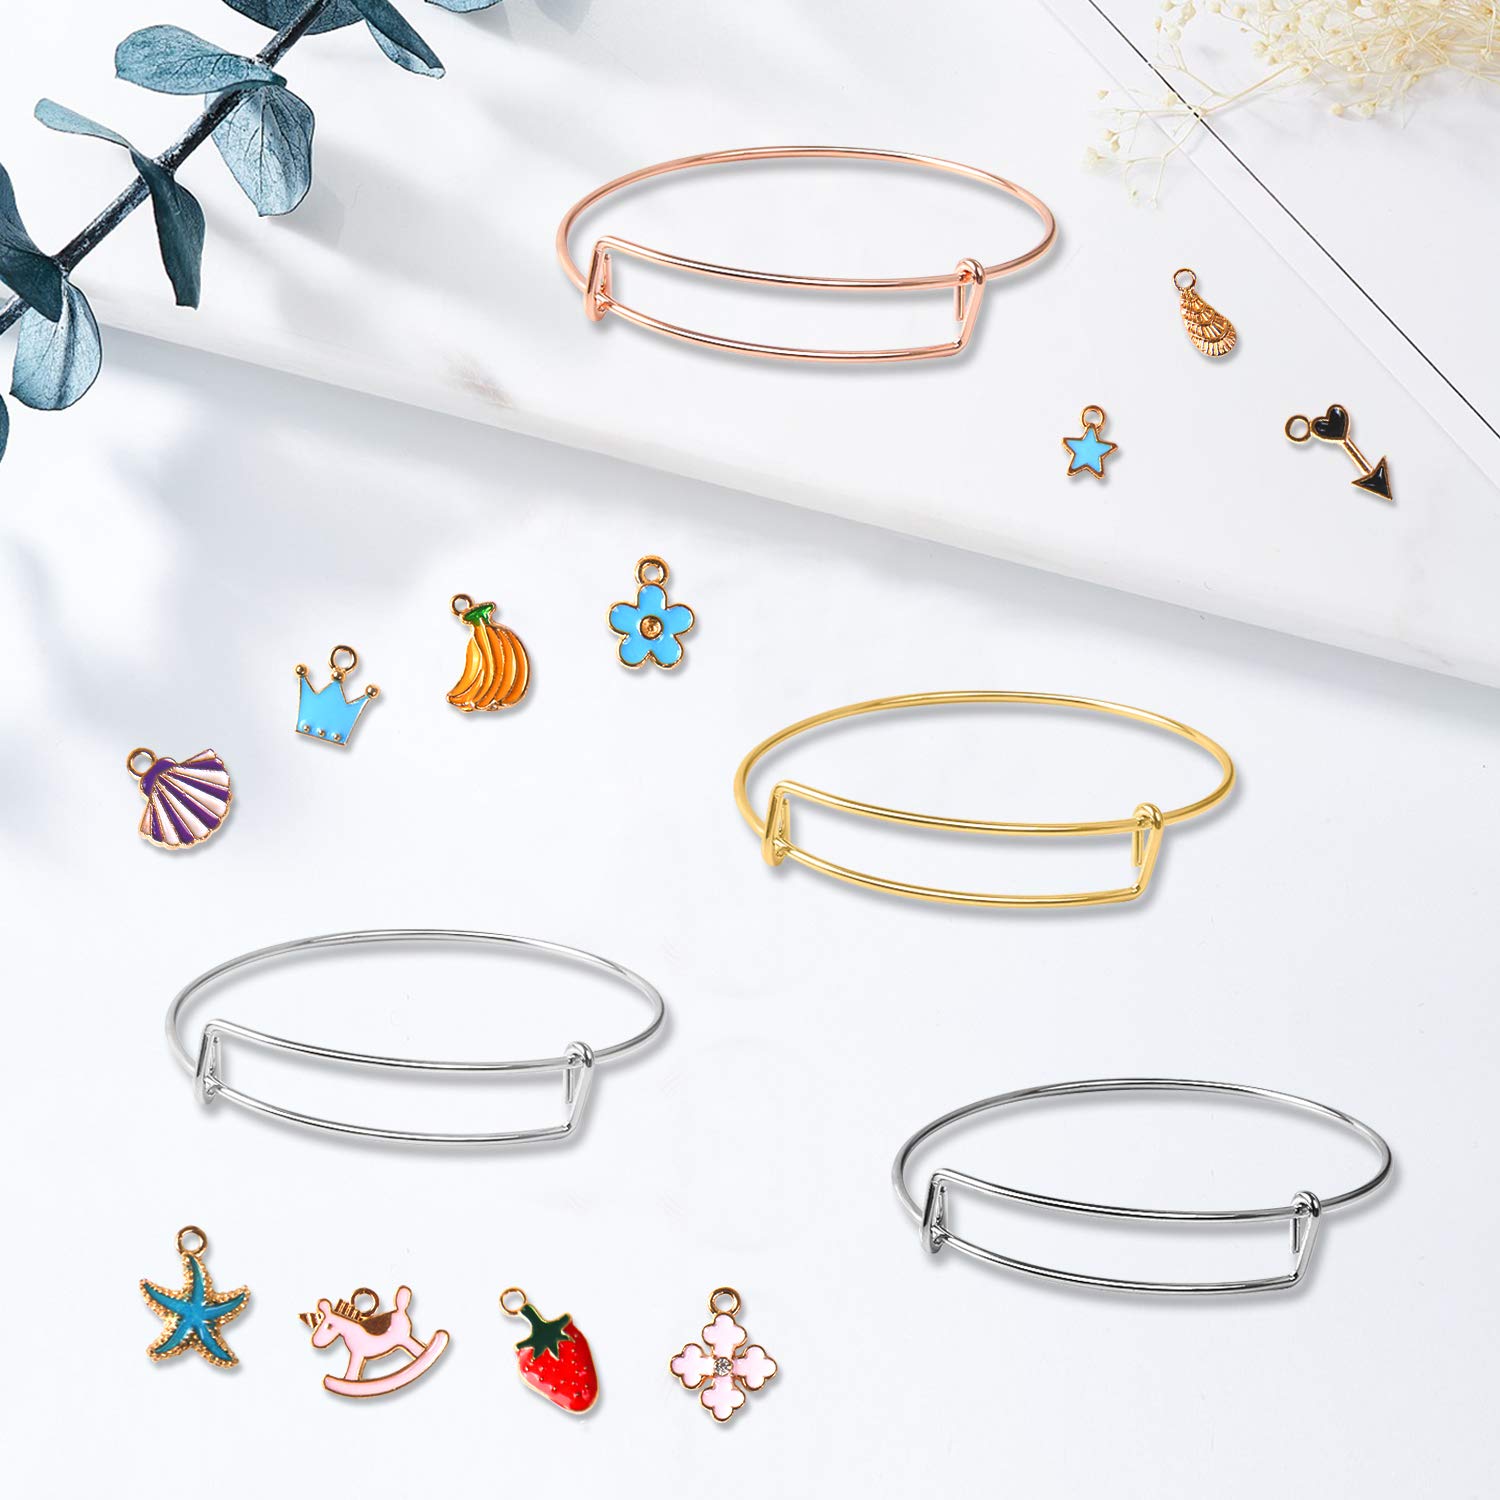 UPINS 100Pcs Expandable Blank Bangle Bracelets Adjustable Wire Bracelets for DIY Jewelry Making (Silver)